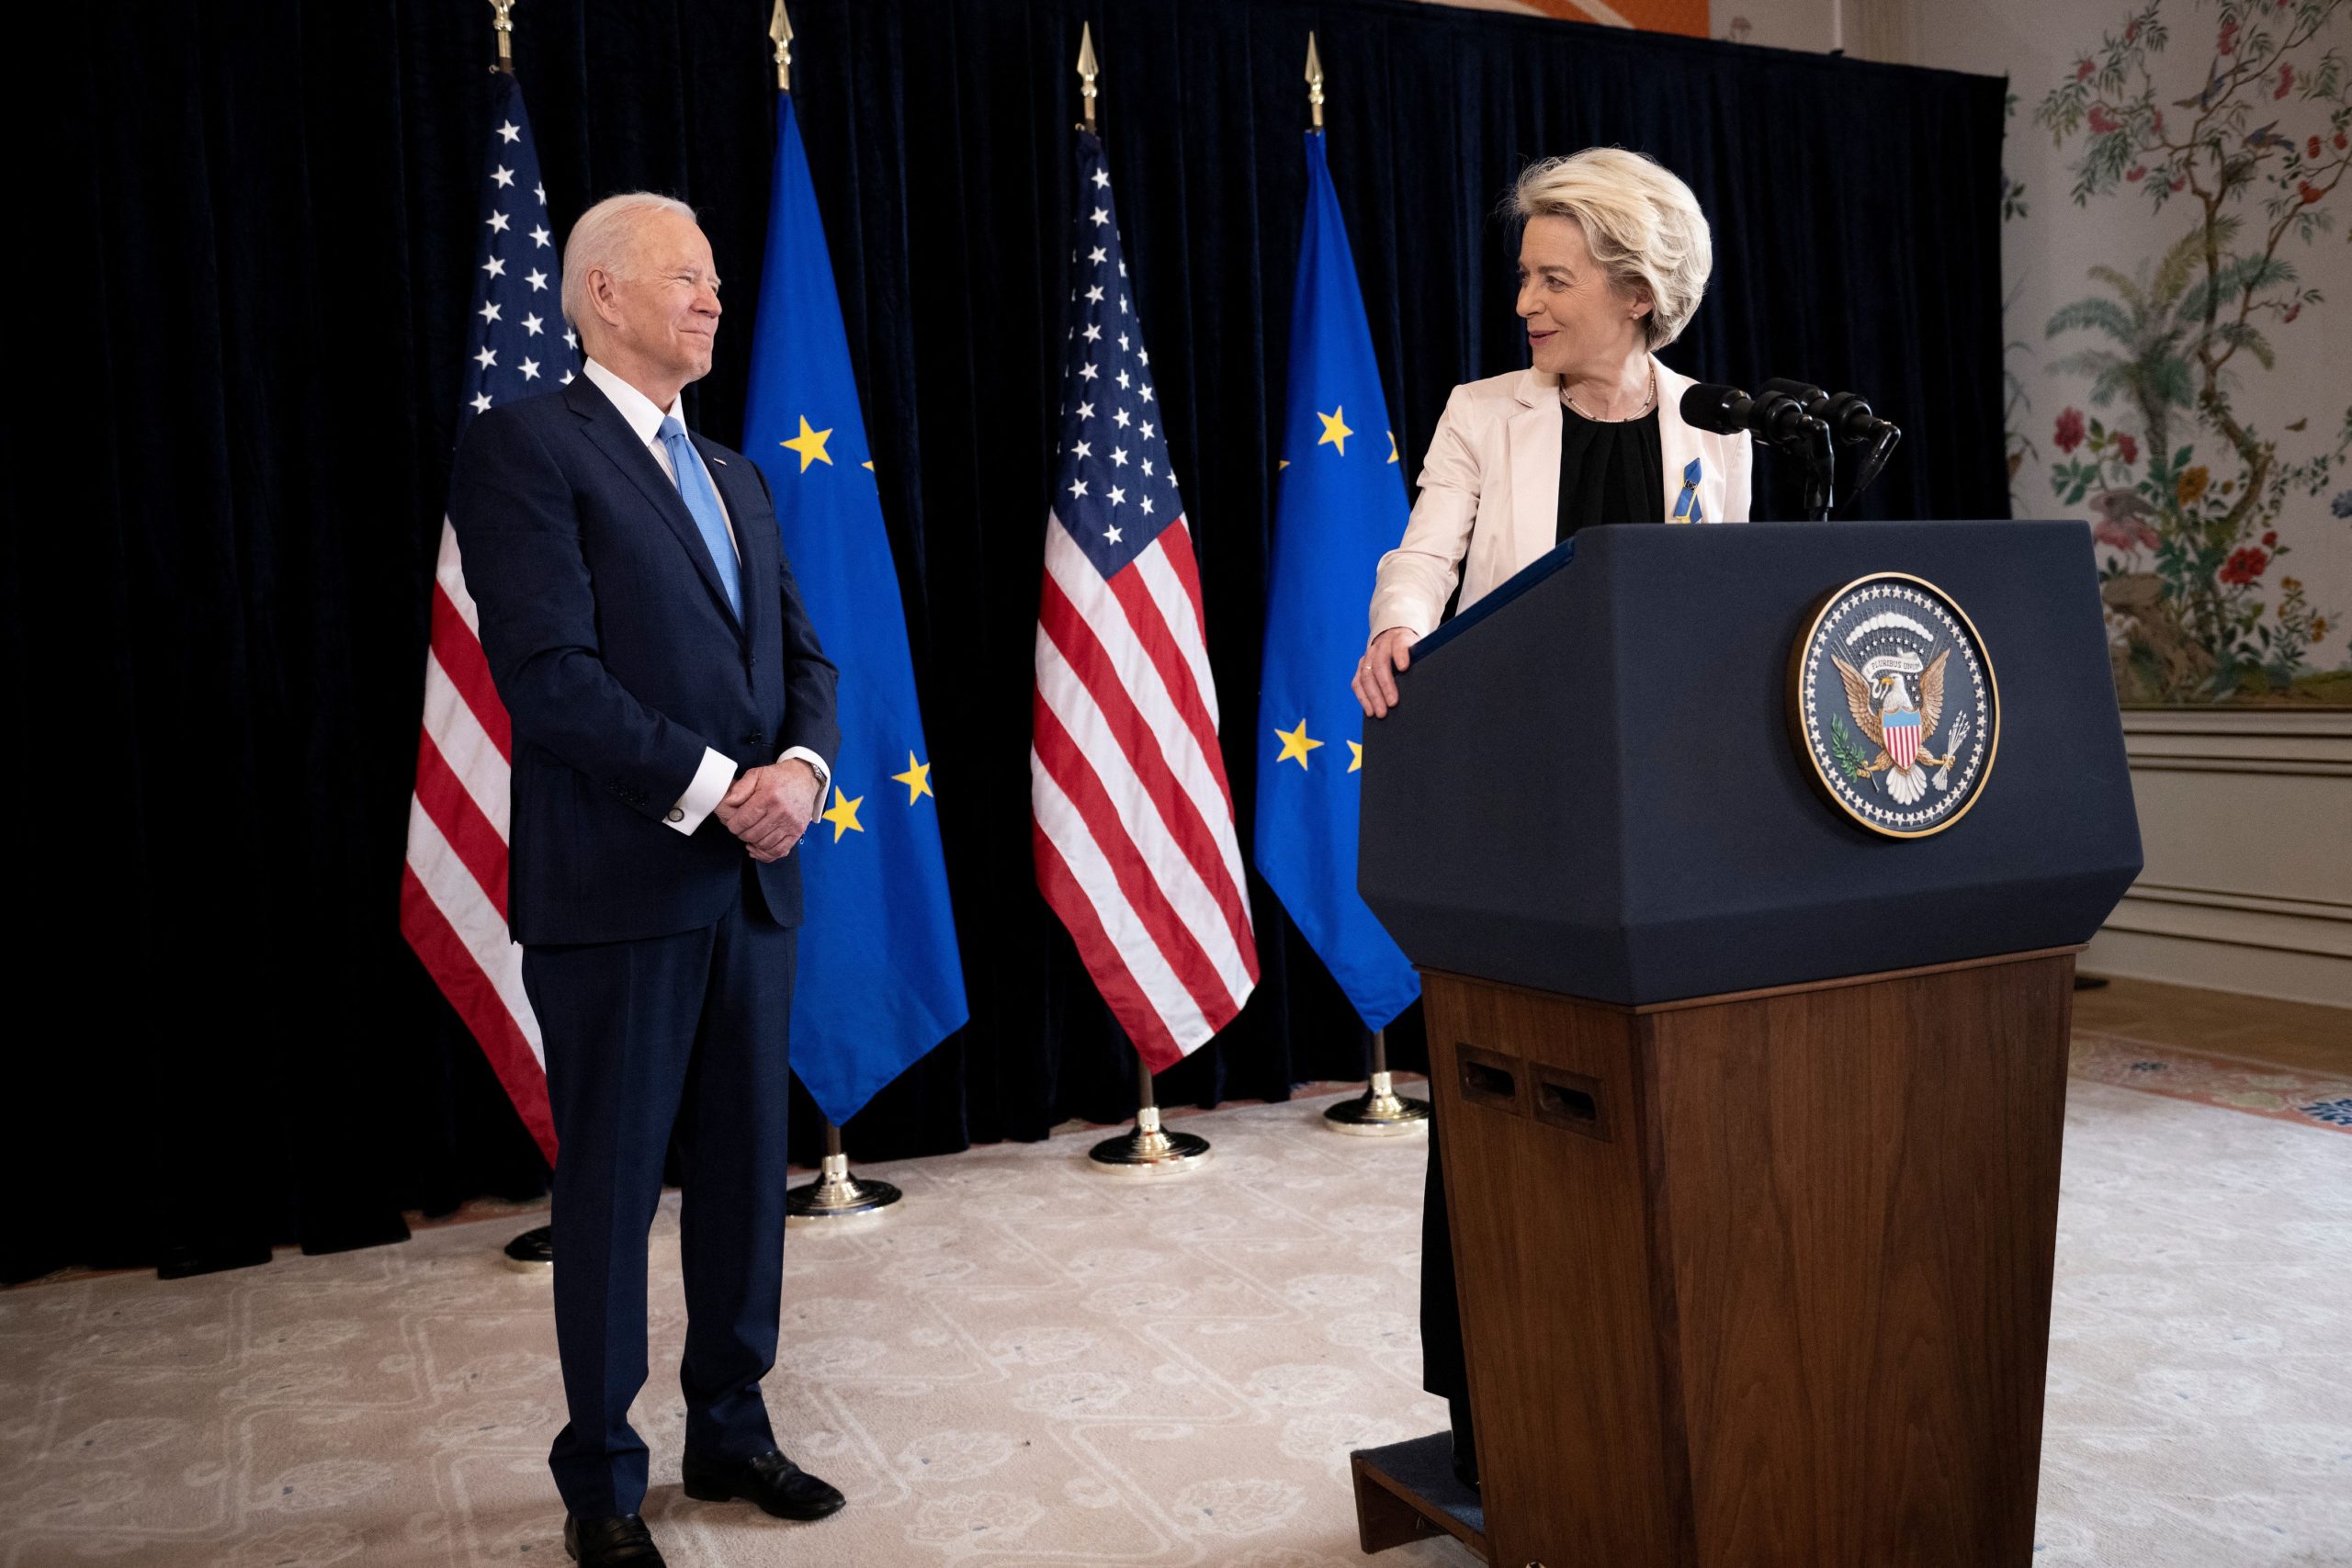 President Joe Biden listens while European Commission President Ursula von der Leyen makes a statement on March 25. (Brendan Smialowski/AFP via Getty Images)